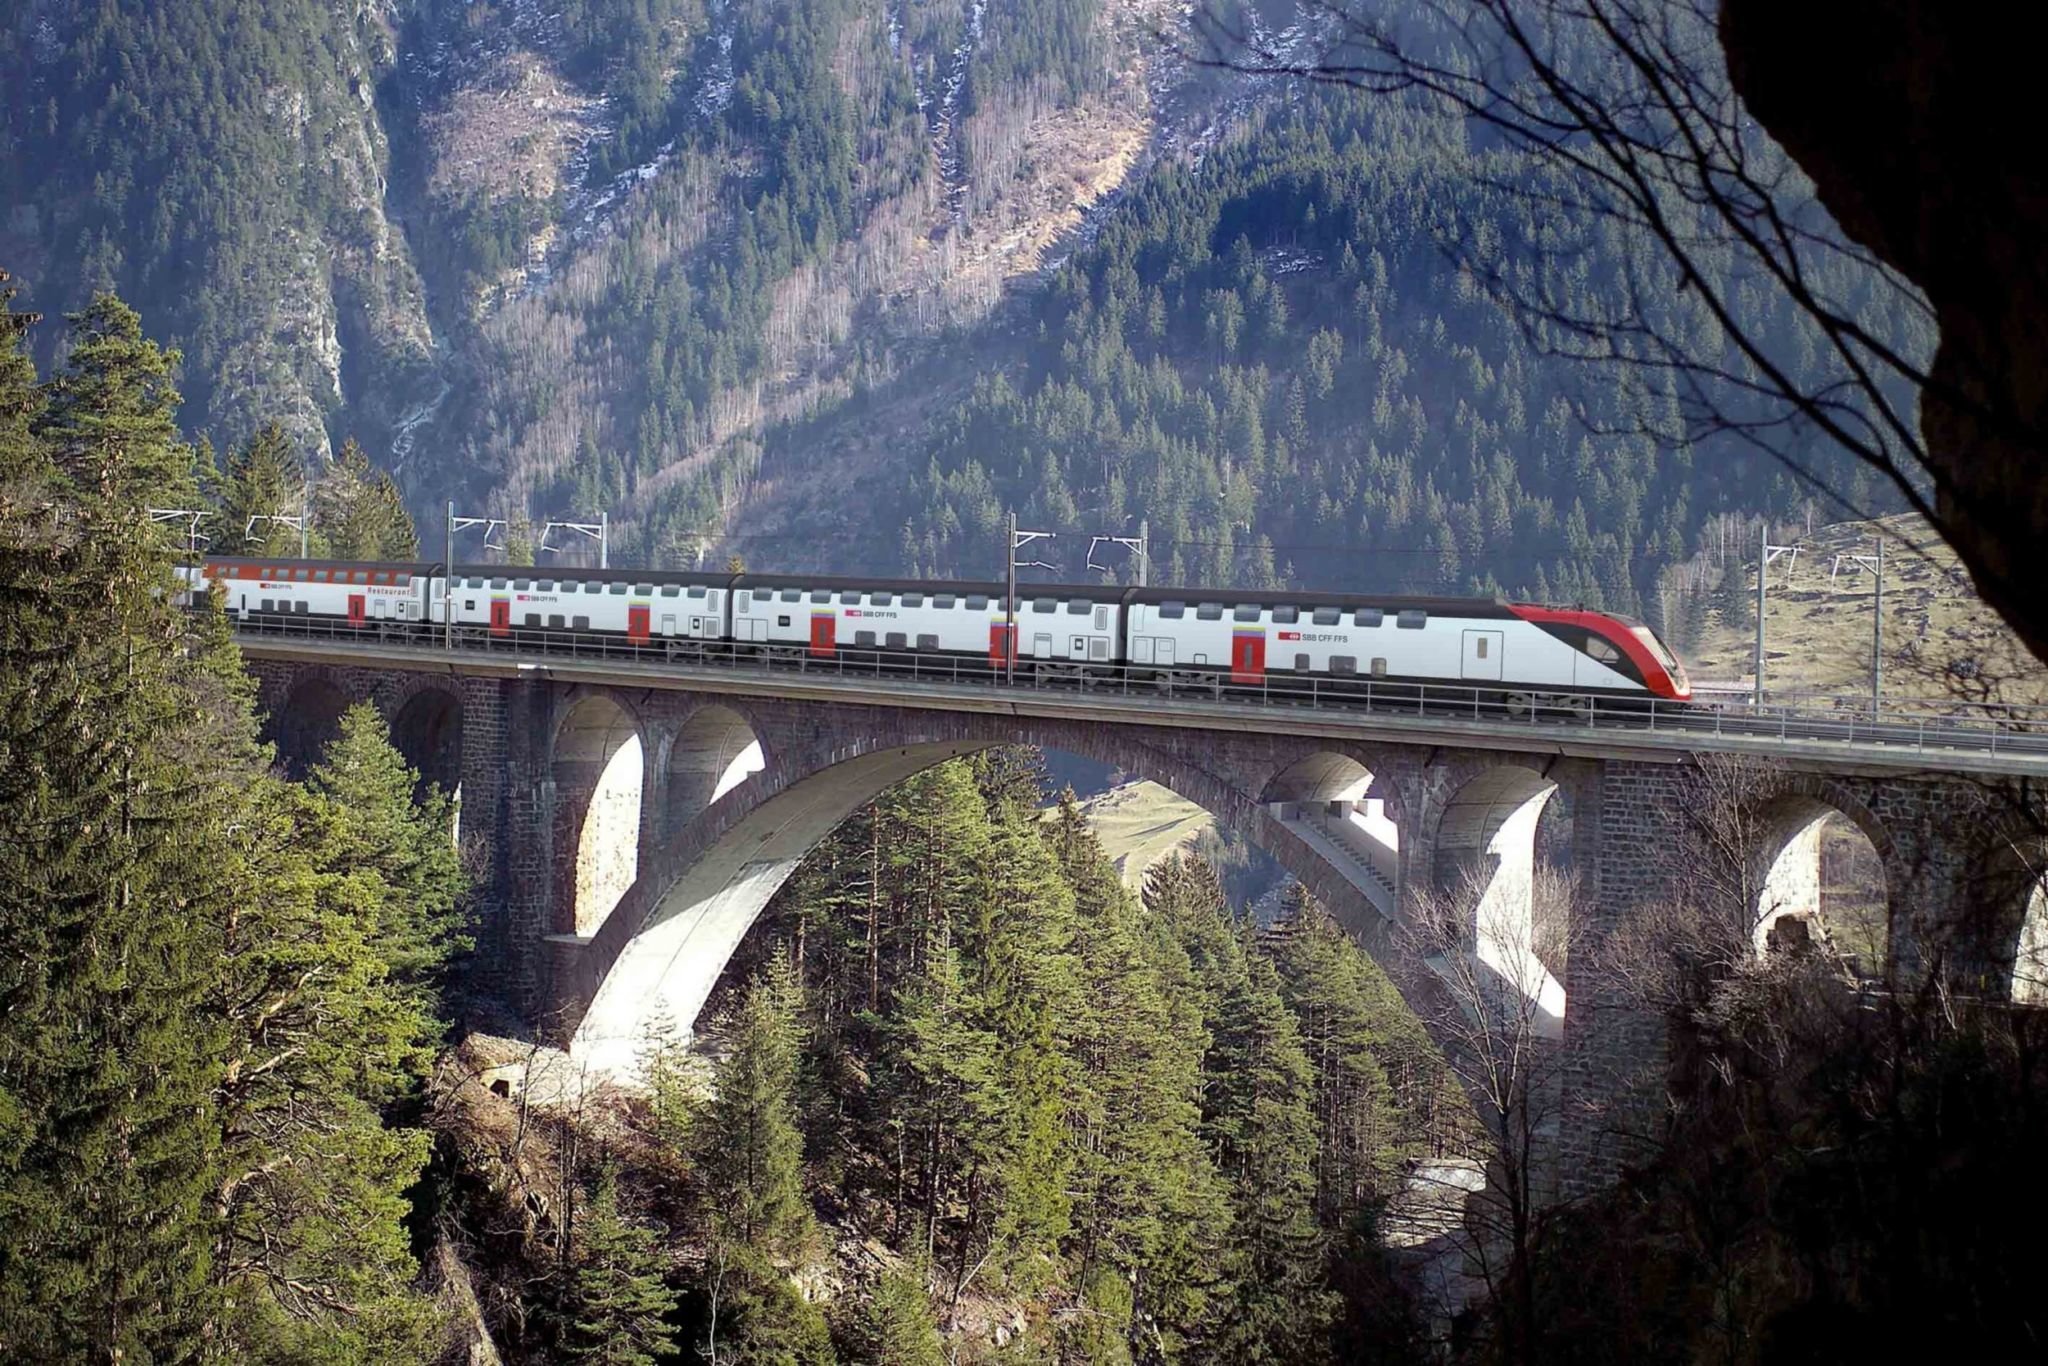 LuxeGetaways - Luxury Travel - Luxury Travel Magazine - Luxe Getaways - Luxury Lifestyle - Navigating Switzerland by Swiss Federal Railways - SBB - Switzerland Train Travel